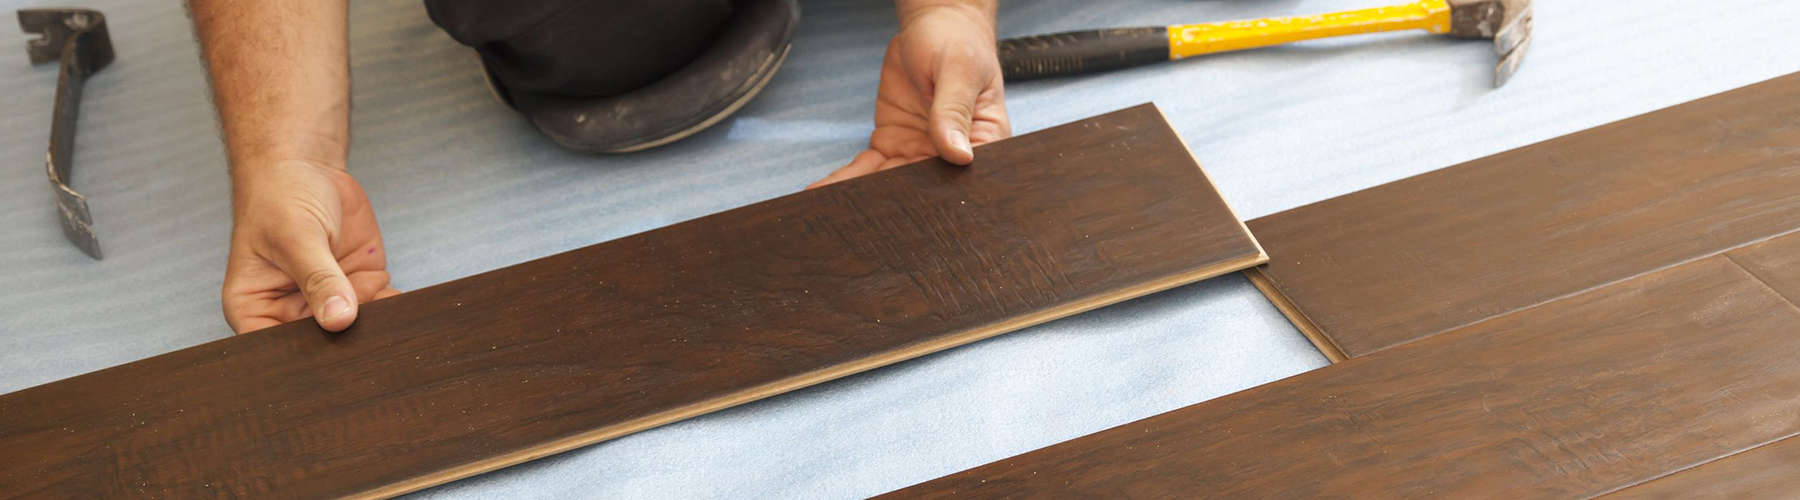 How To Install Vinyl Plank Flooring, Easiest Way To Cut Vinyl Plank Flooring